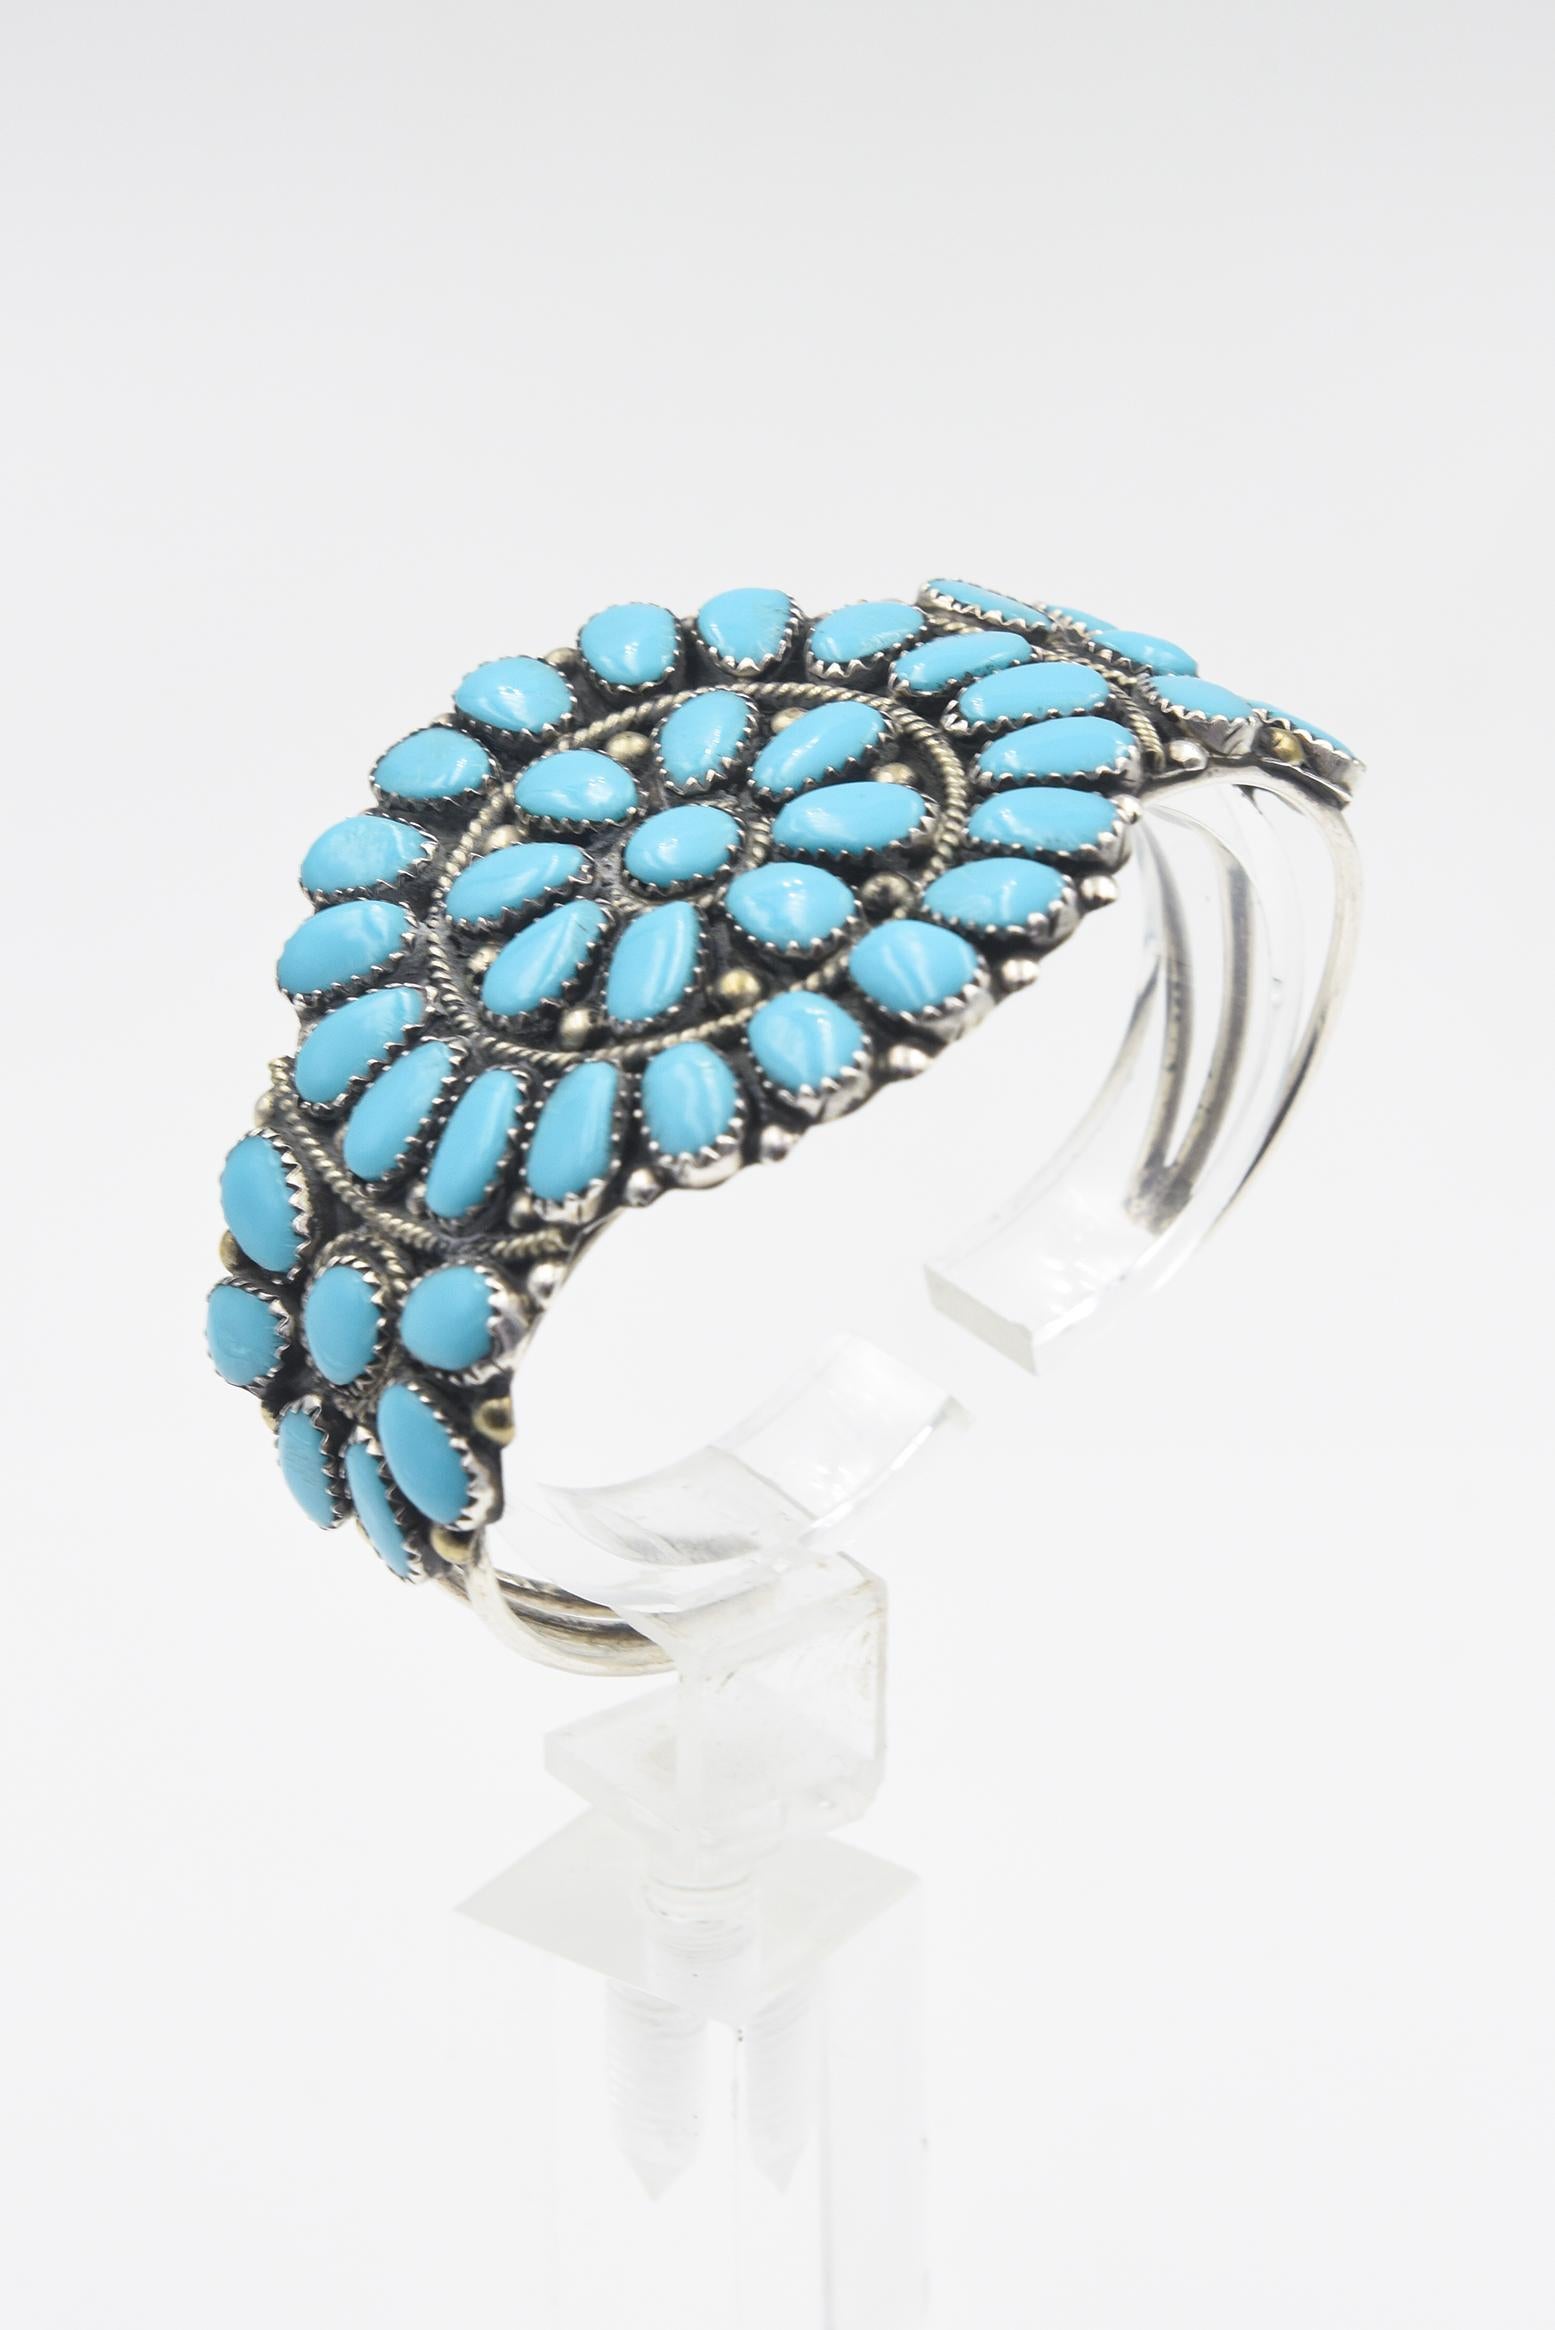 Navajo Juliana Williams Turquoise Sun Wheel Sterling Silver Cuff Bracelet  For Sale 1